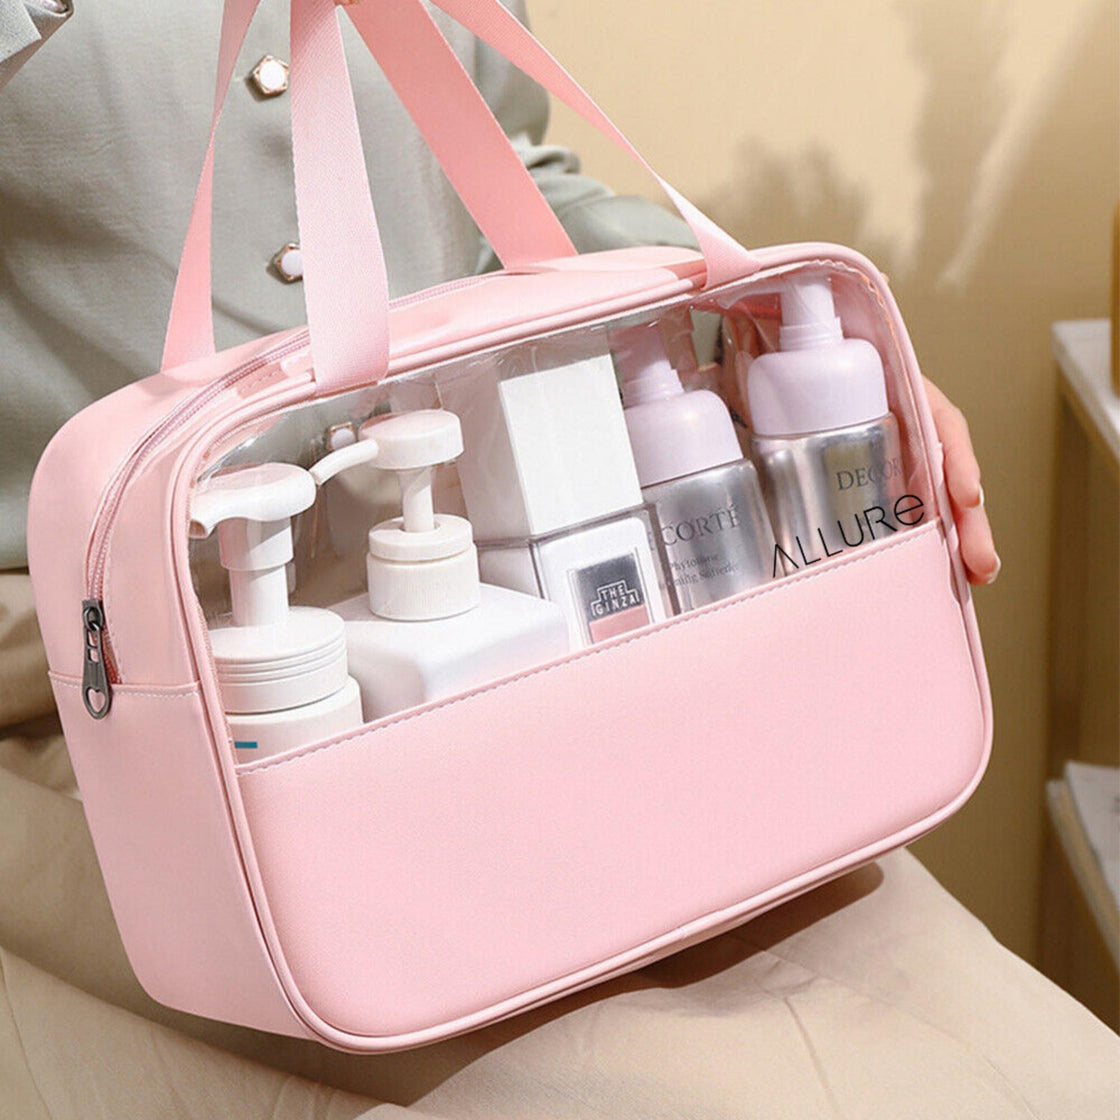 Allure Toiletry Bag medium Pink